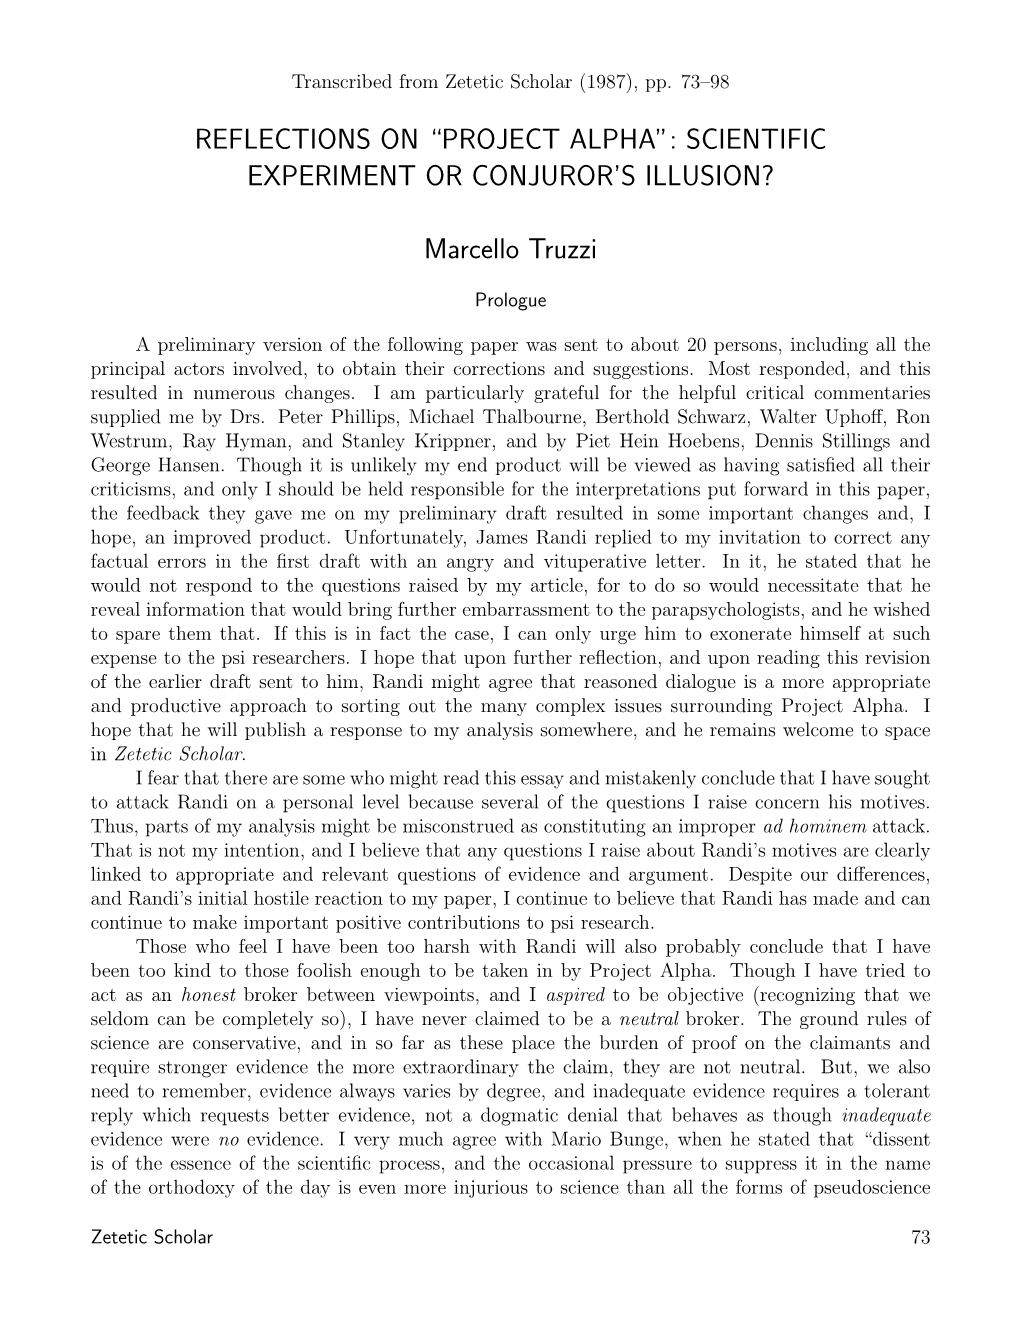 Project Alpha”: Scientific Experiment Or Conjuror’S Illusion?